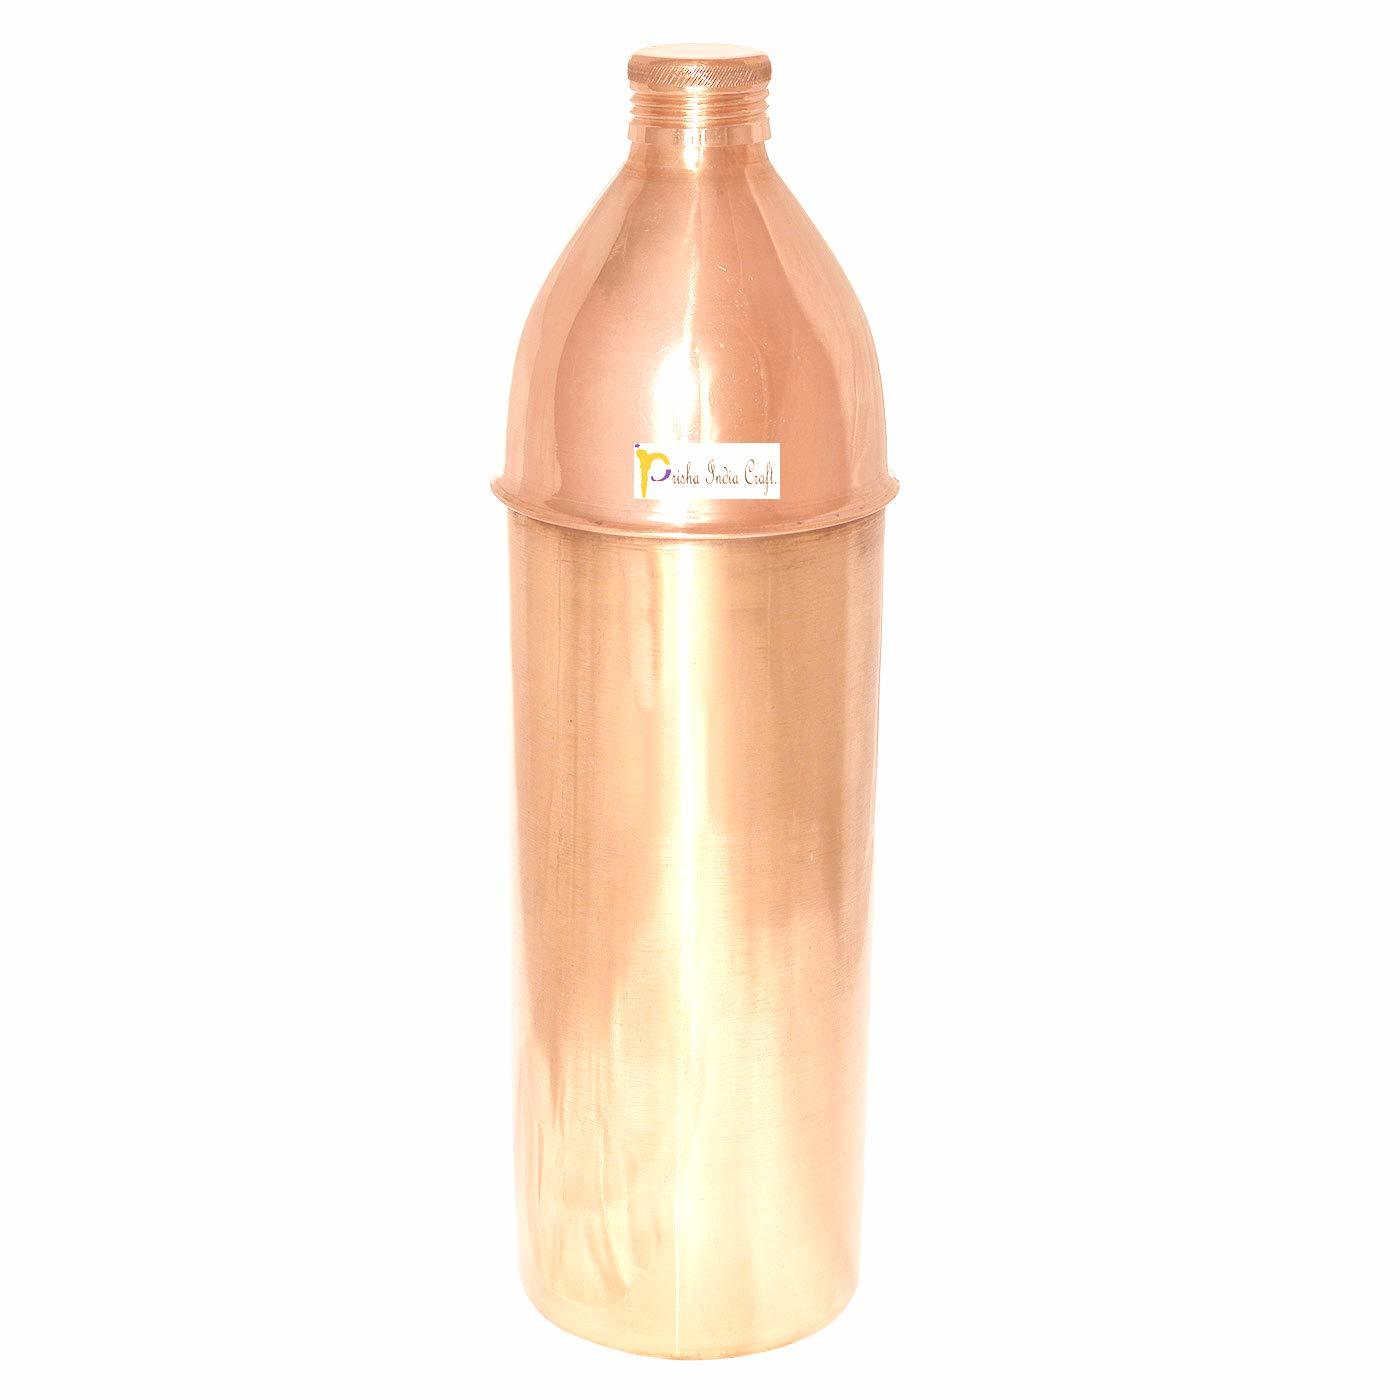 Primary image for Prisha India Craft Copper Bottle, Good Health Benefits Bottle, Capacity 850 ML, 